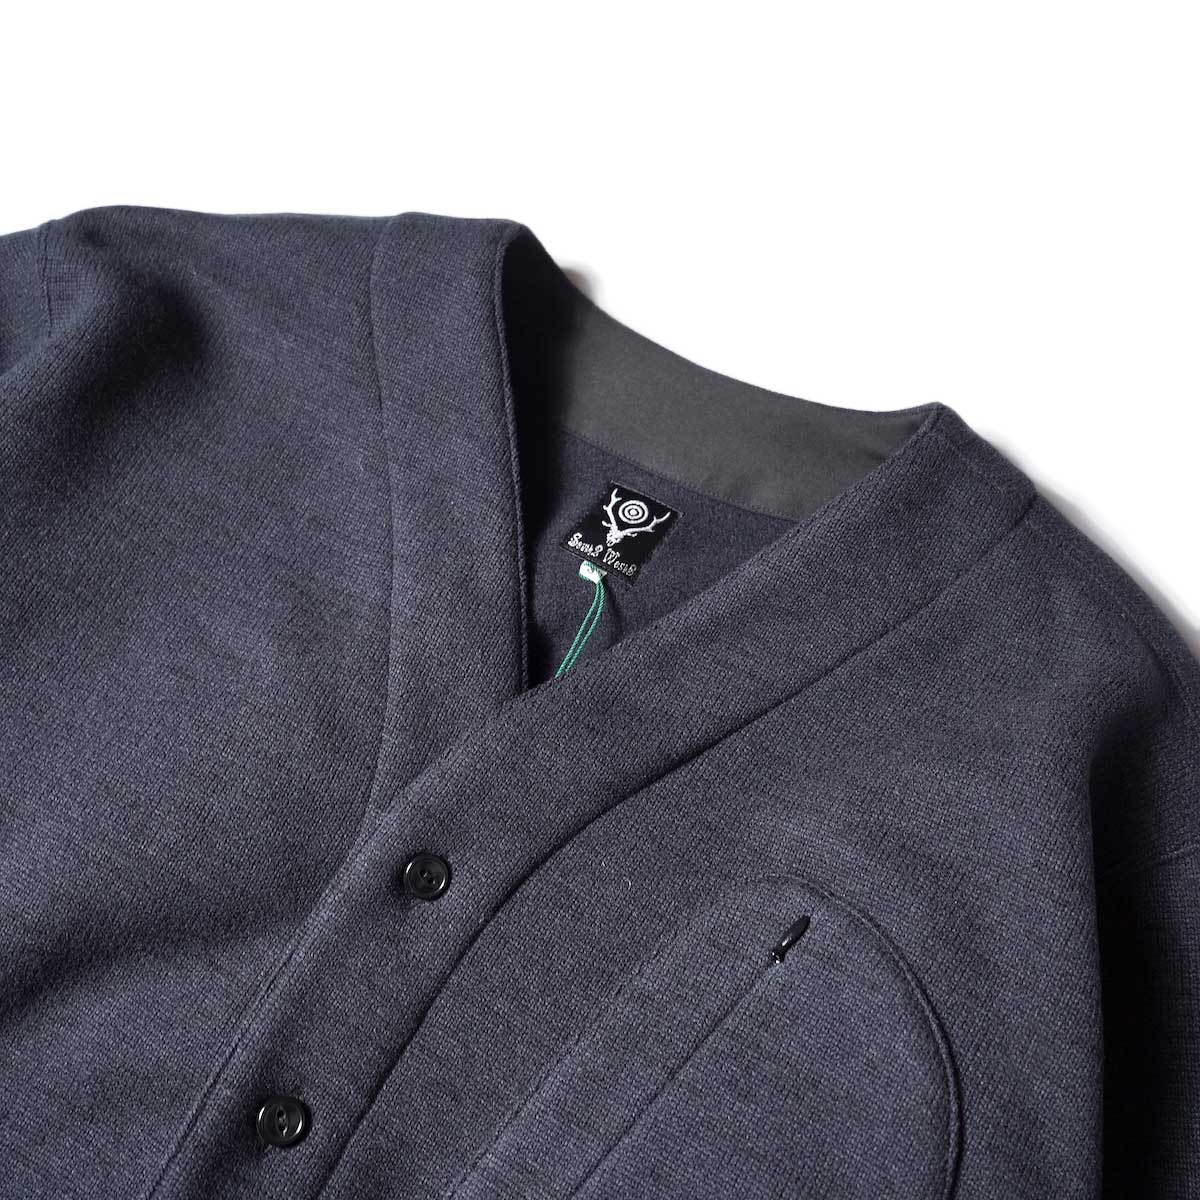 South2 West8 / Scouting Shirt - POLARTEC Fleece Lined Jersey (Black)襟